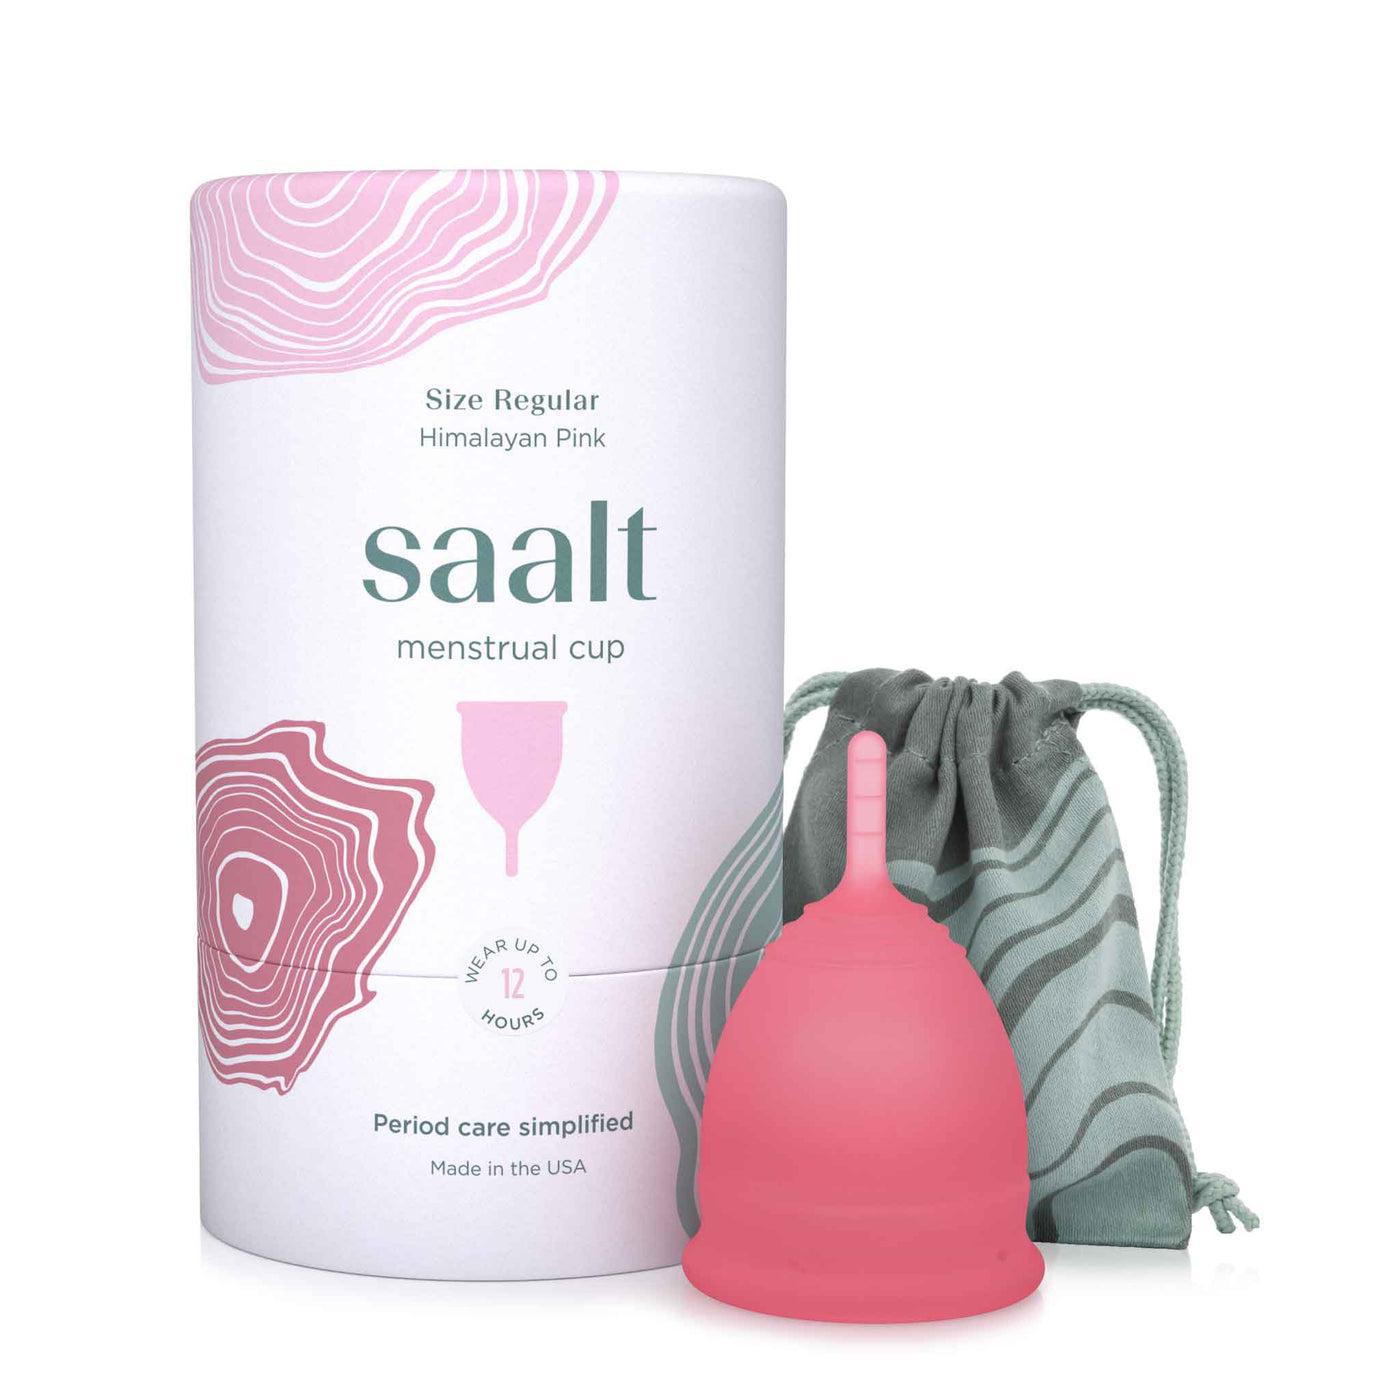 Saalt Menstrual Cup - Size Regular